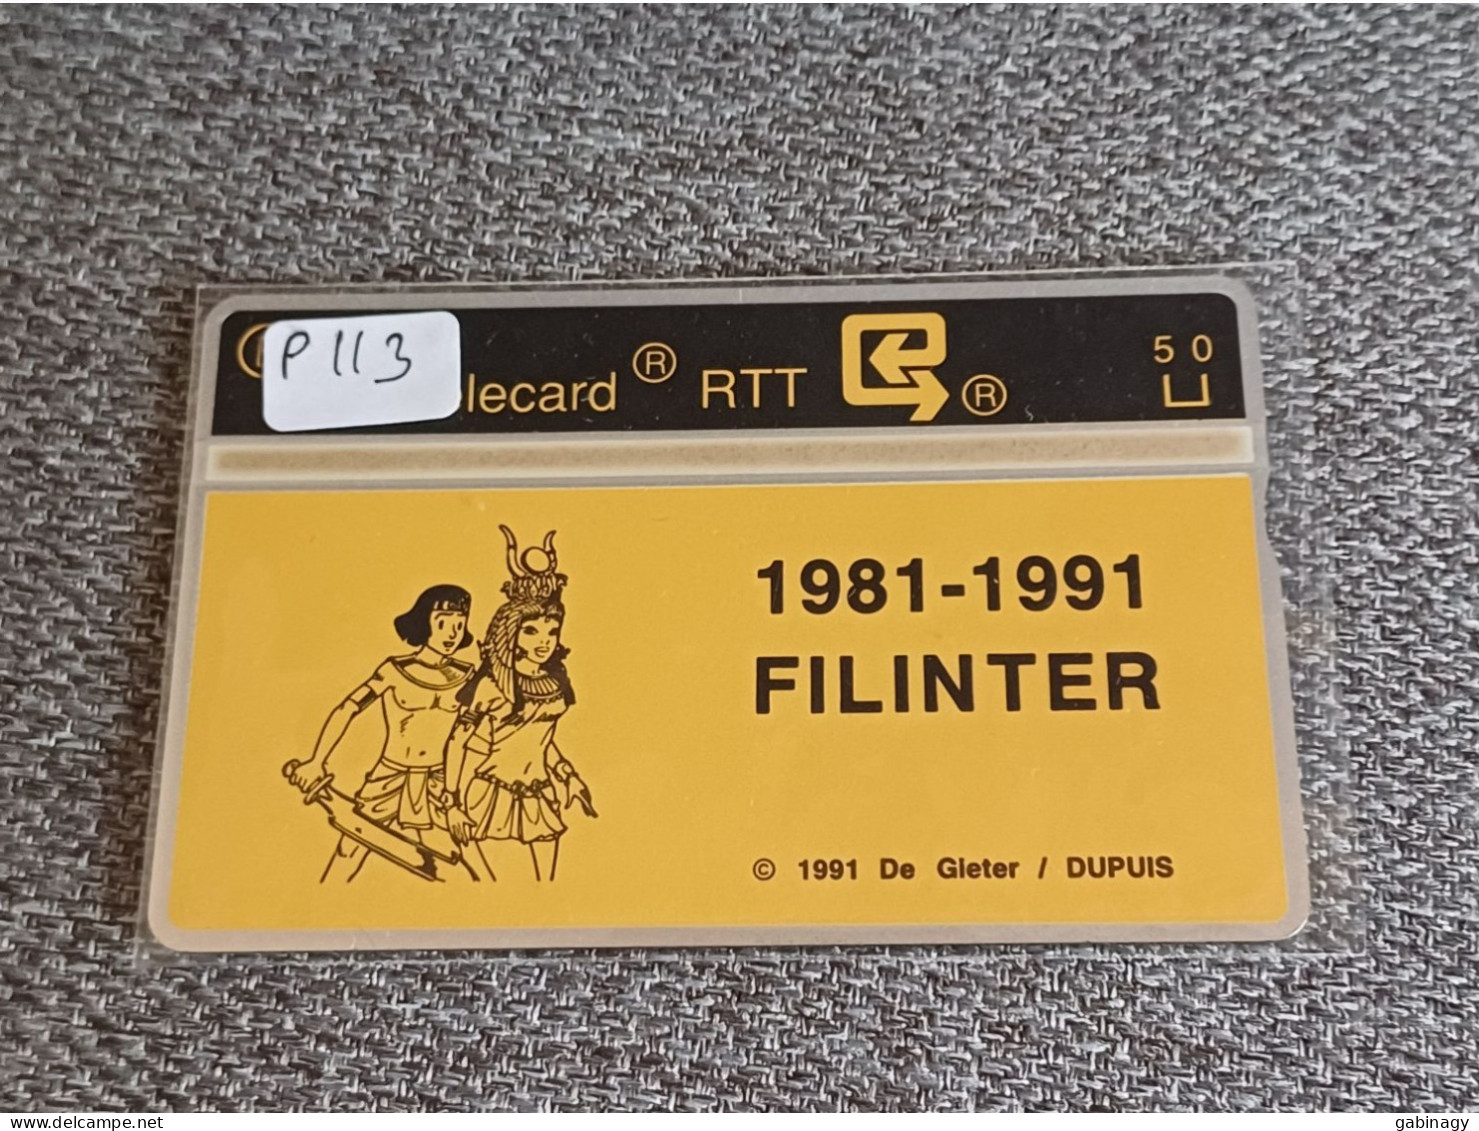 BELGIUM - P113 - FLINTER - CARTOON - MINT - 1.000 EX. - Zonder Chip